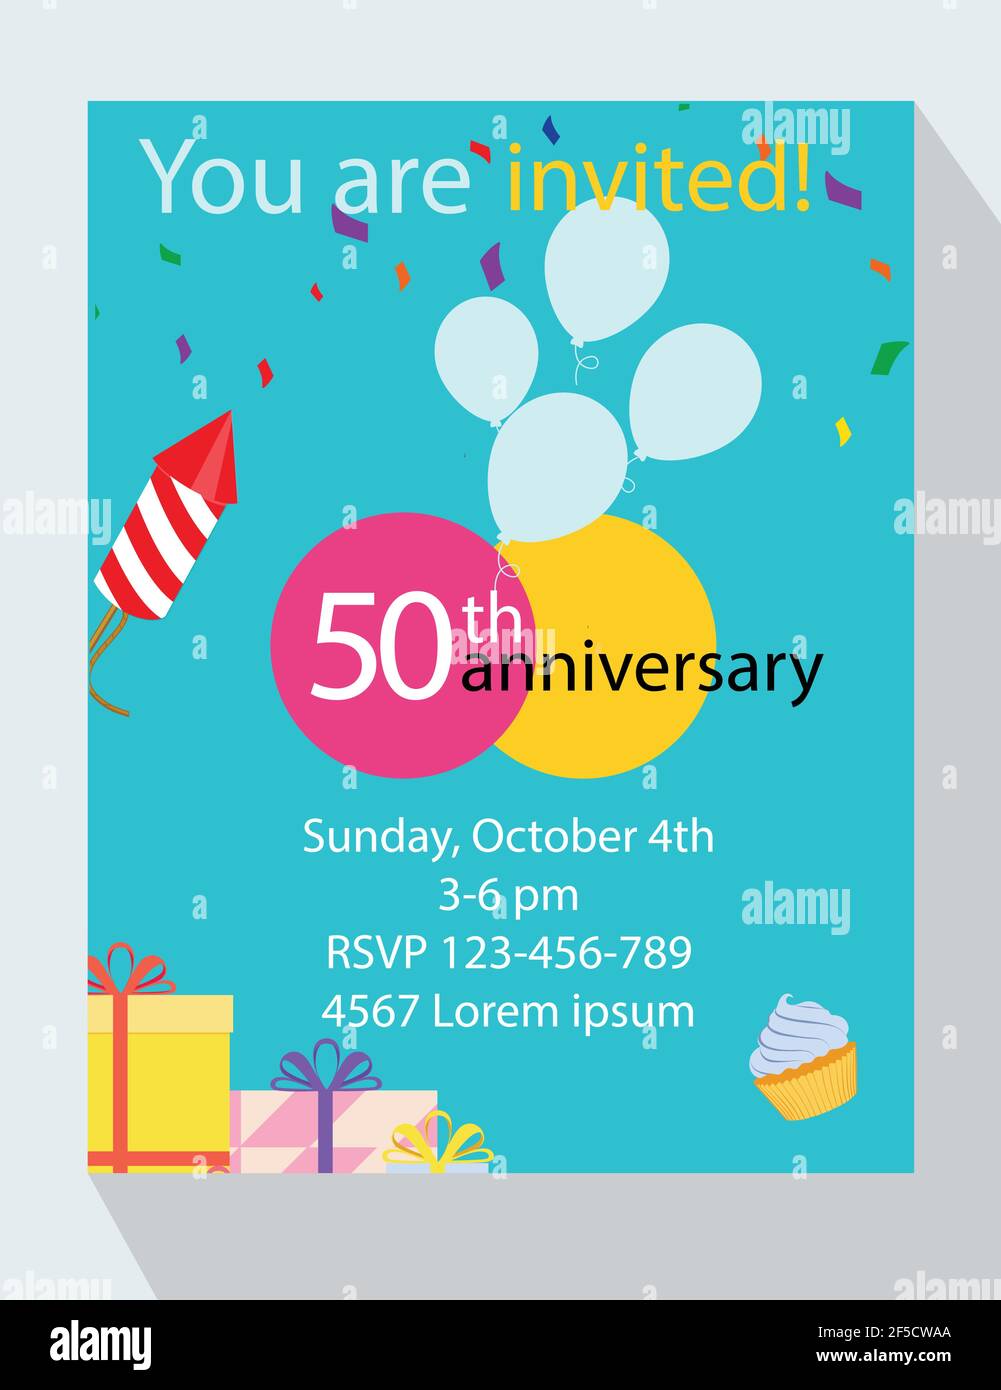 Birthday Party Invitation Card You Are Invited Happy 50th Birthday Anniversary Stock Vector